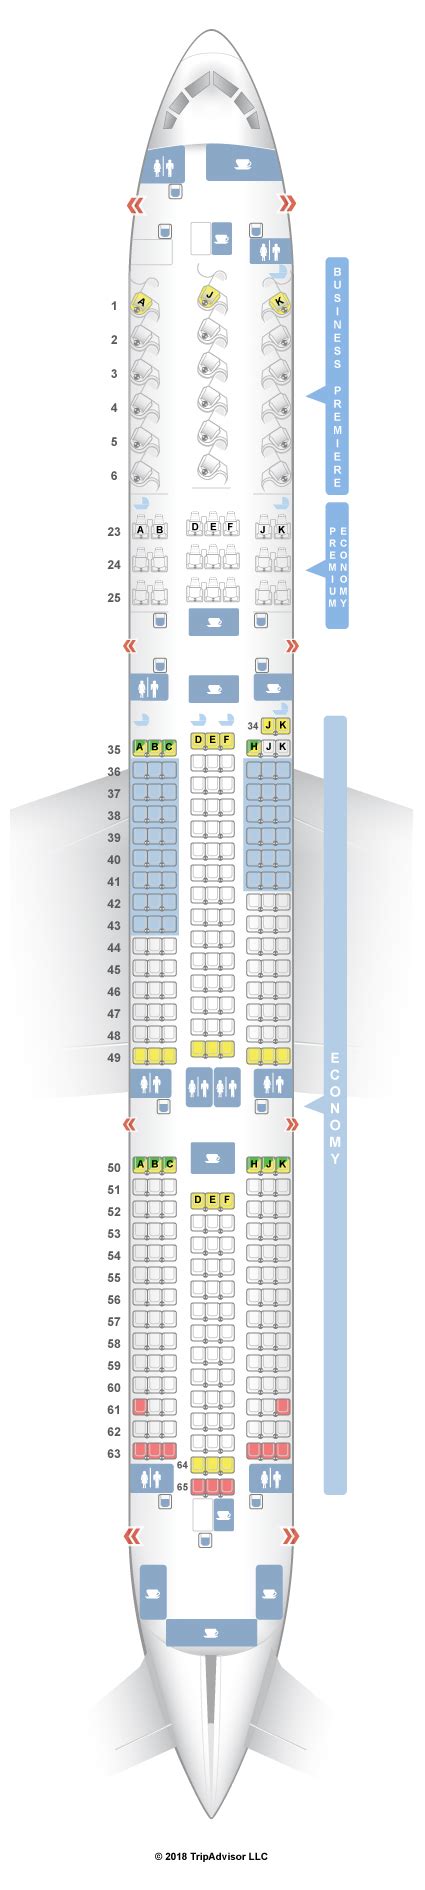 Boeing Dreamliner Seat Map